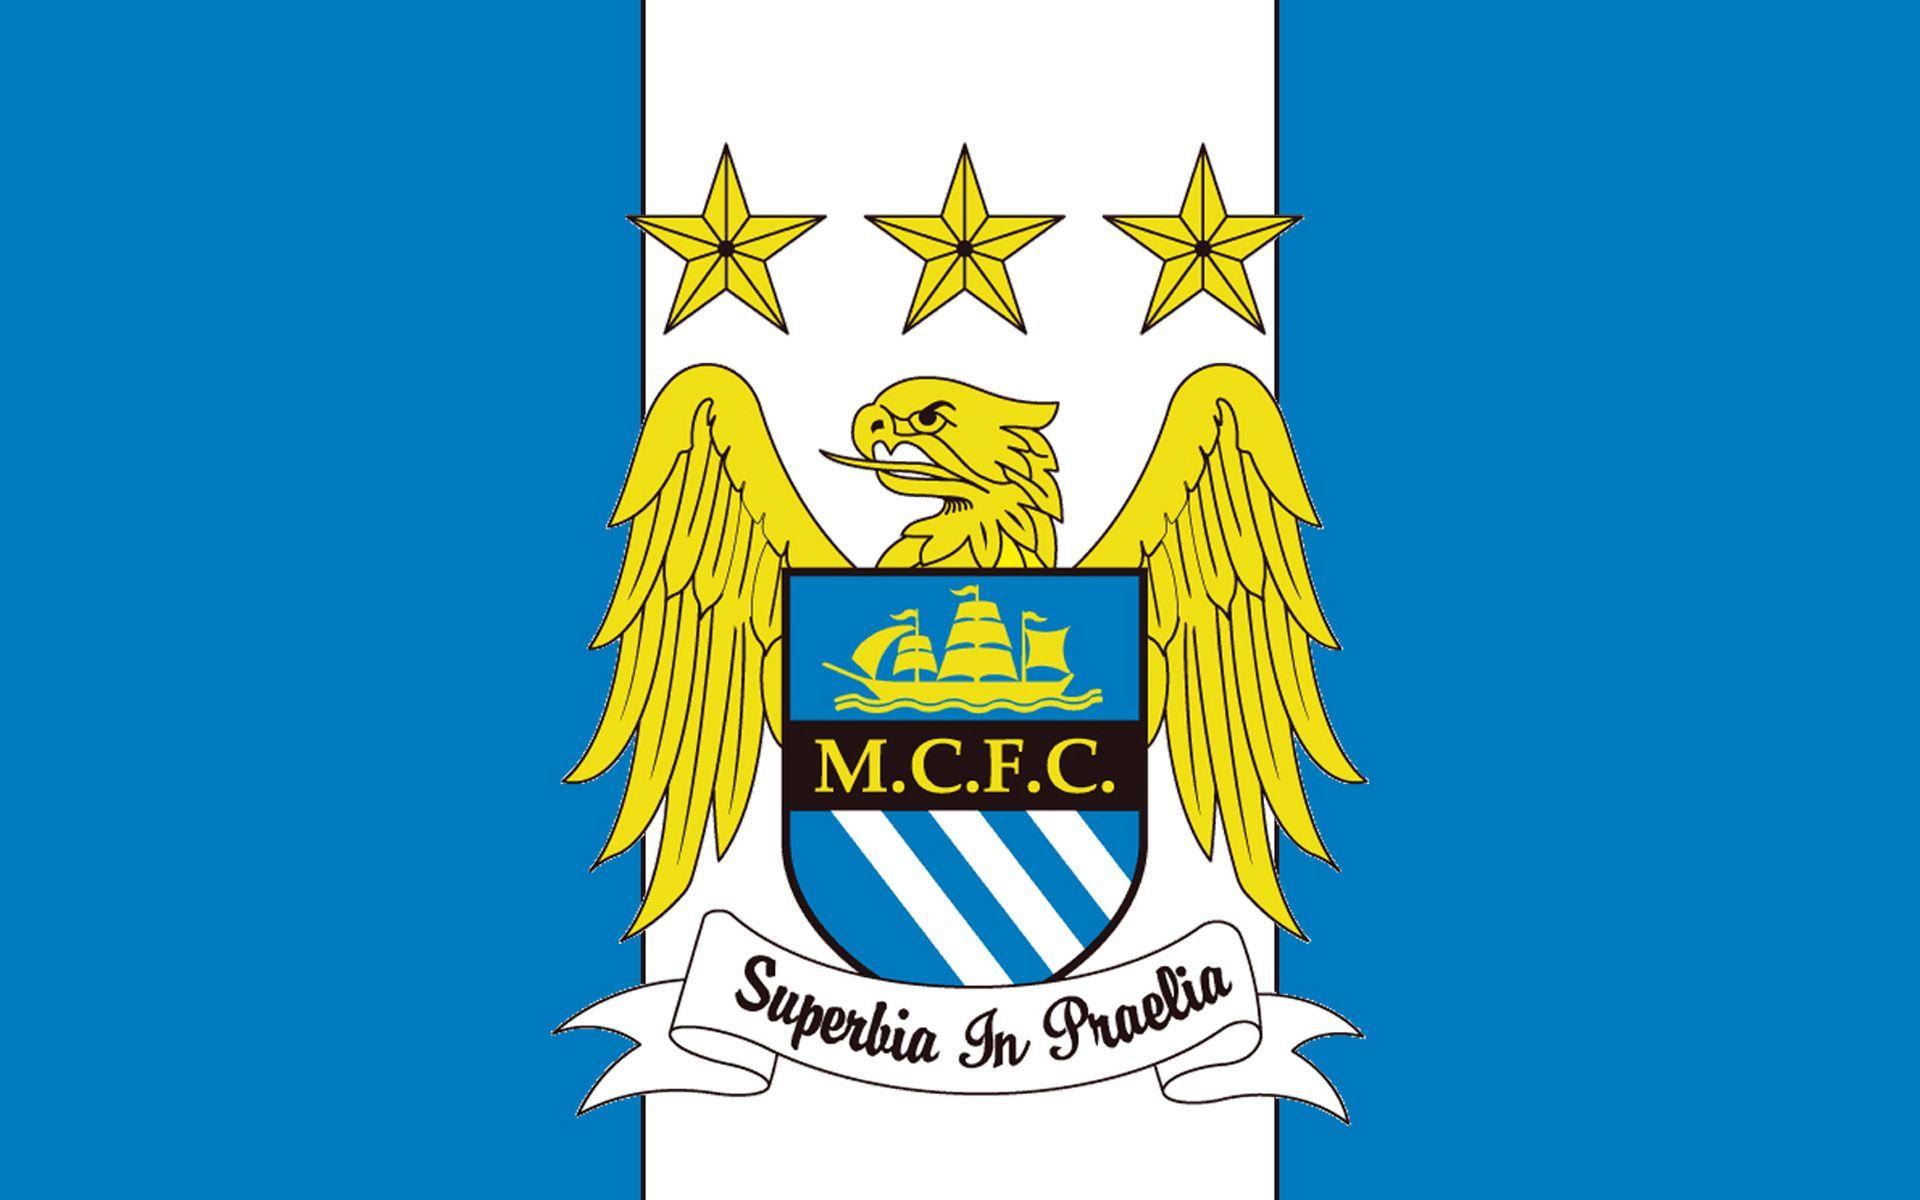 Manchester City Logo Image Widescreen HD For Desktop Backgrounds